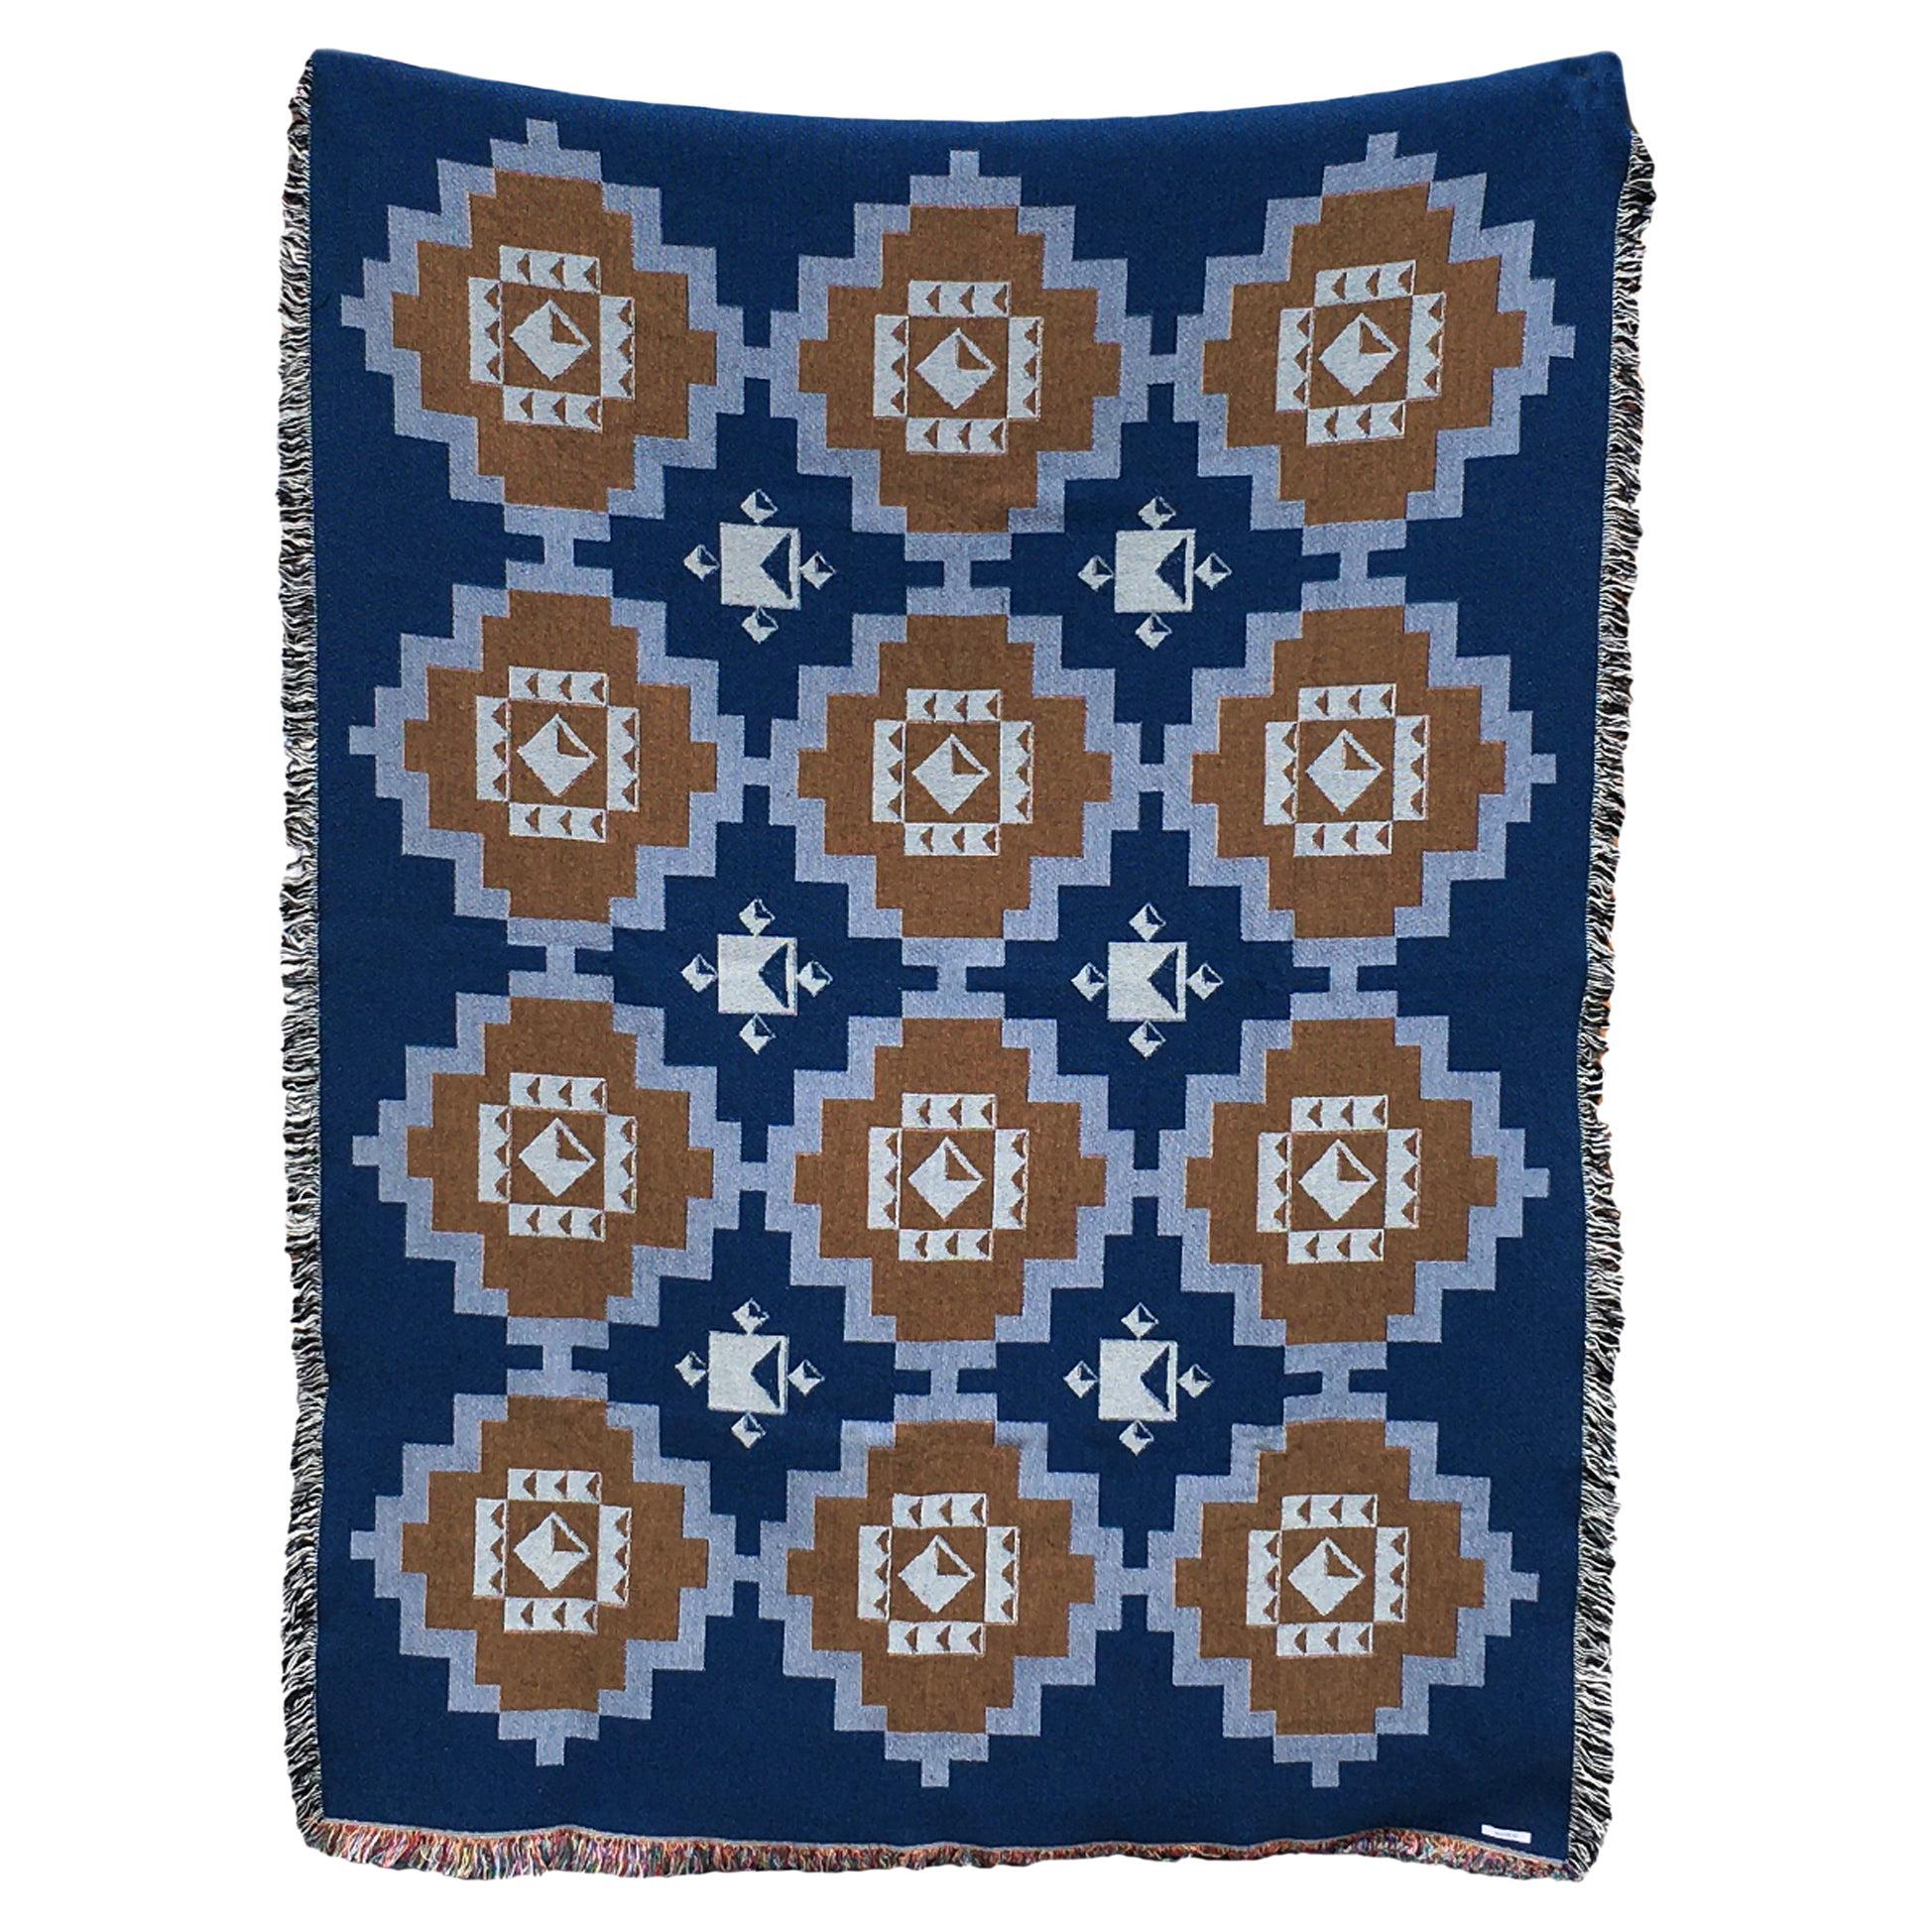 Woven Throw Blanket in Navy Blue Coverlet Geometric Pattern 